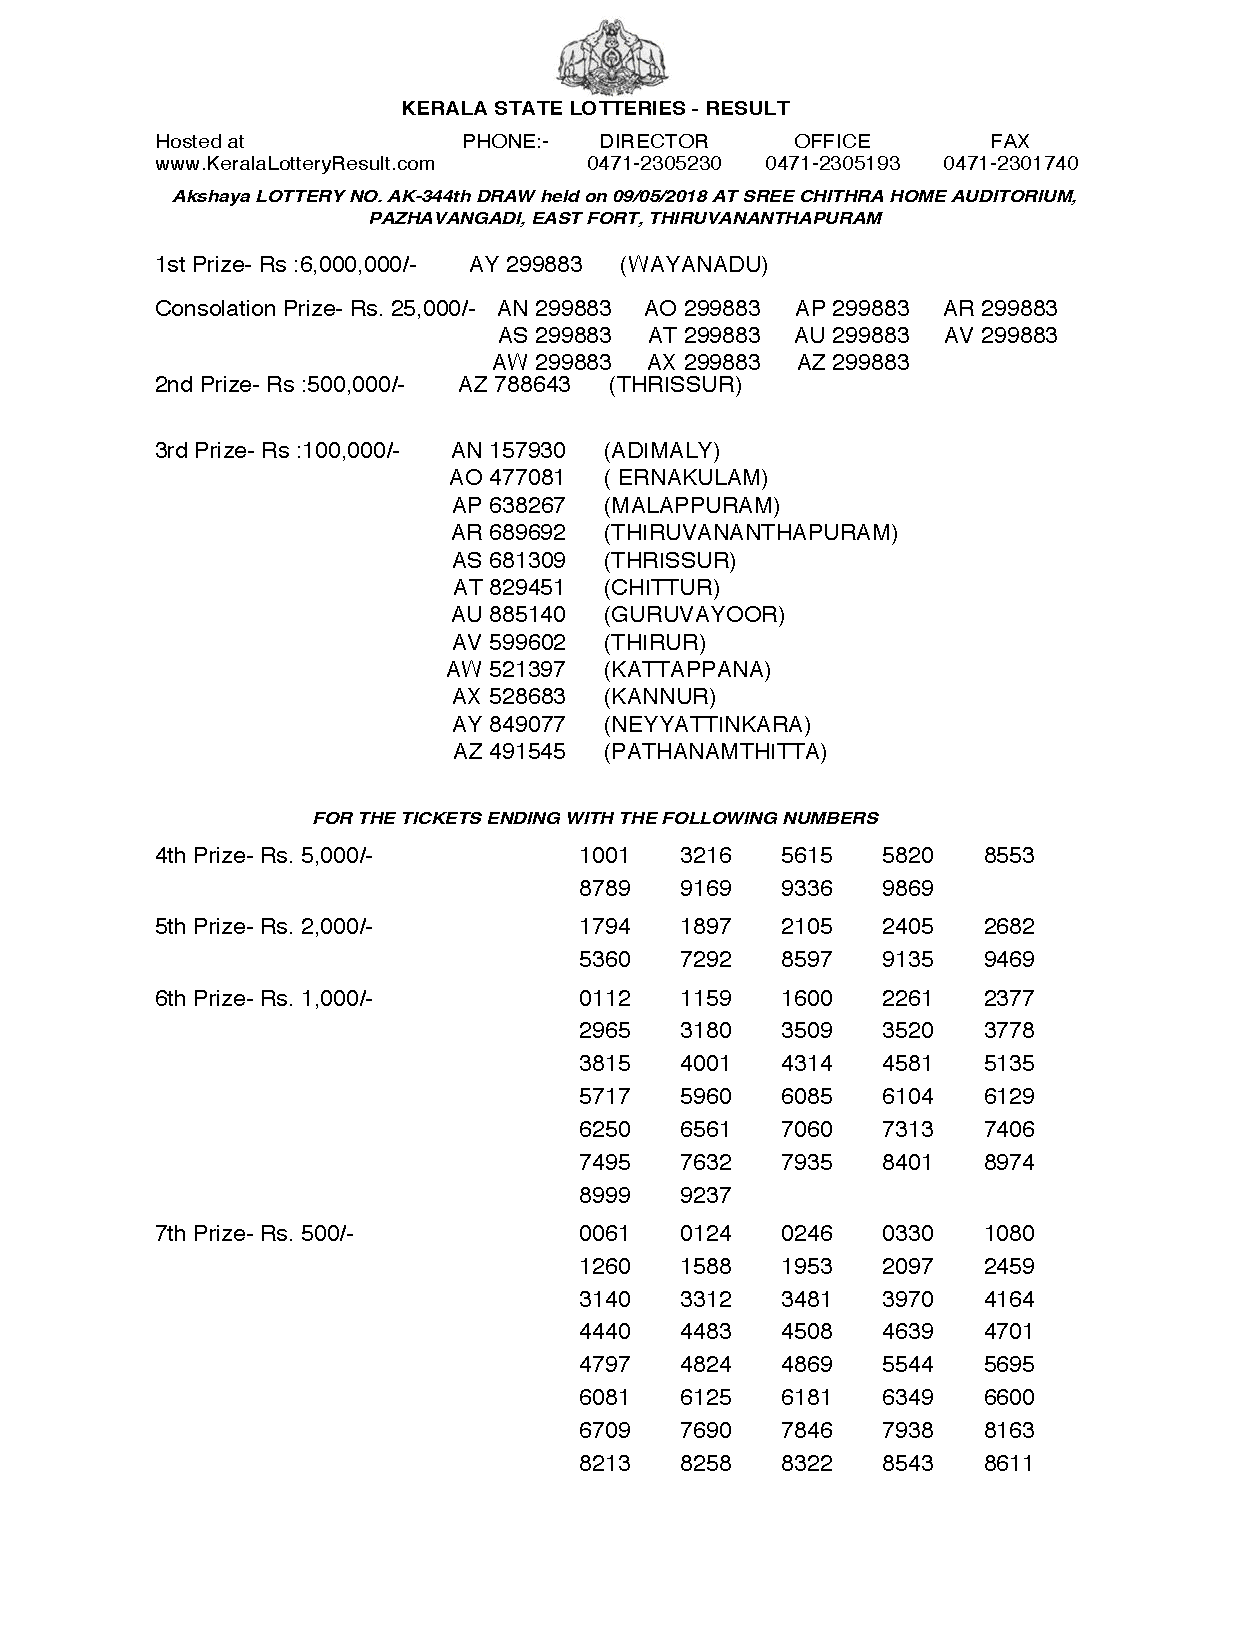 Akshaya AK344 Kerala Lottery Results Screenshot: Page 1